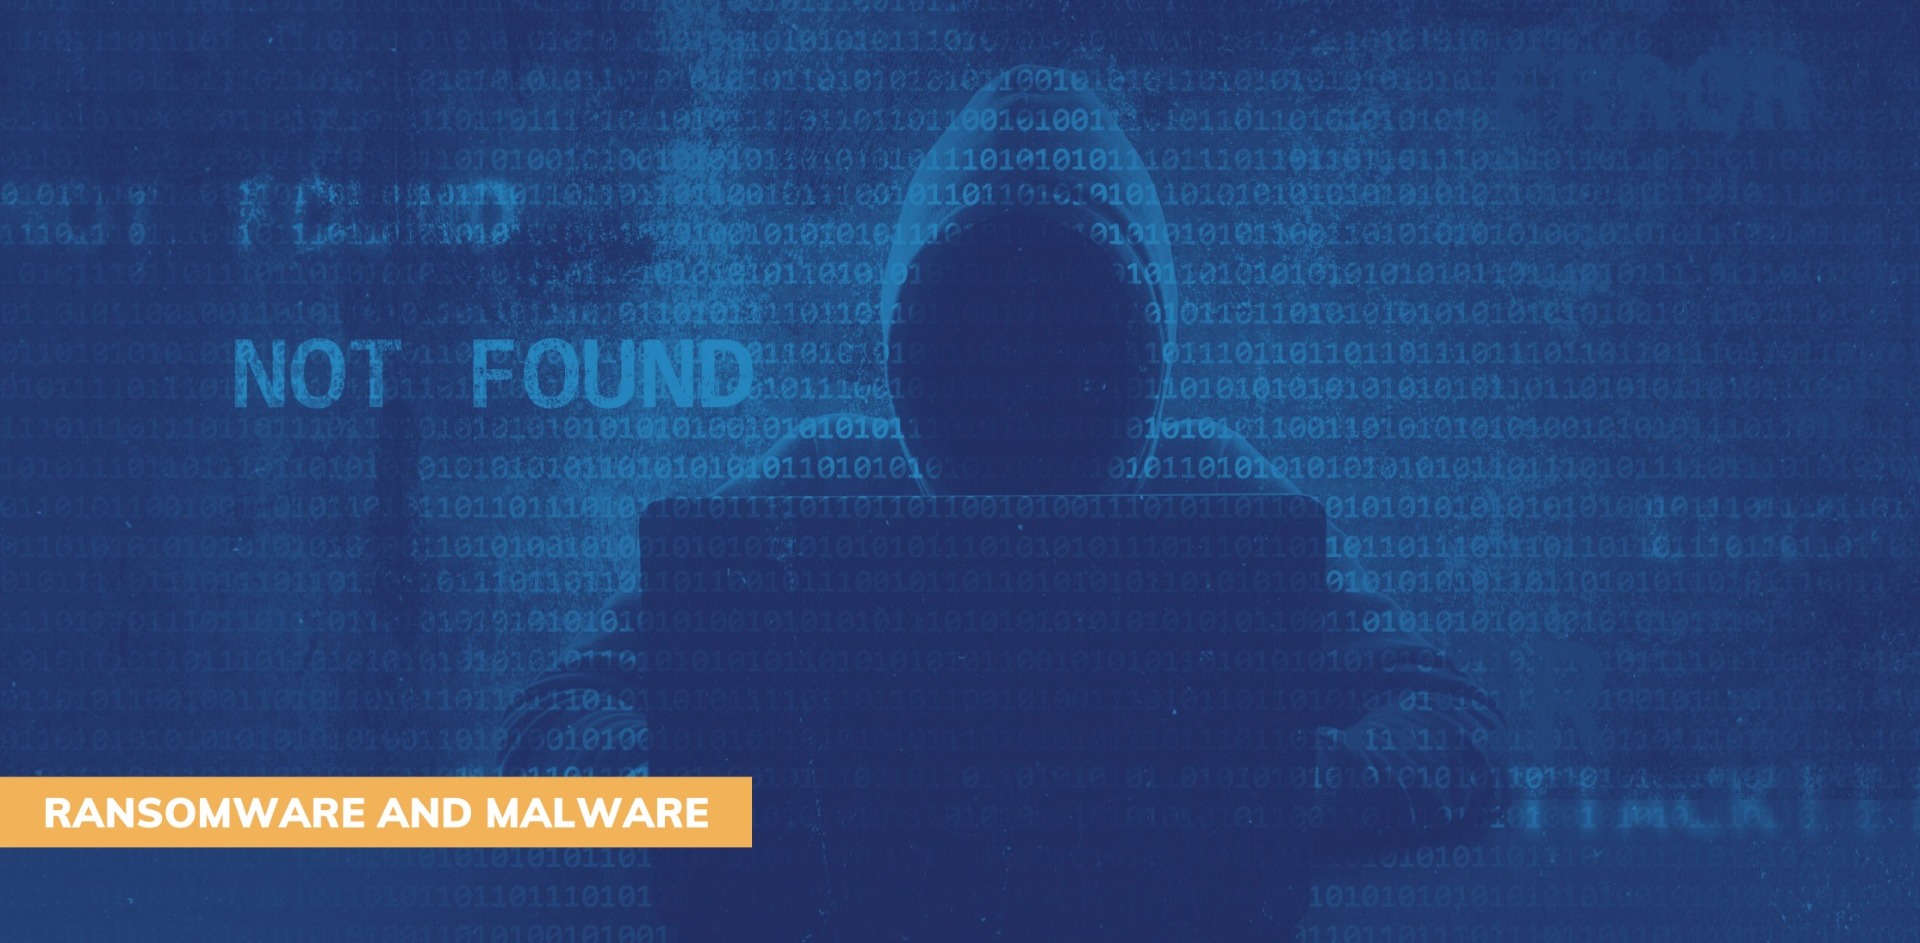 Ransomware and malware attacks